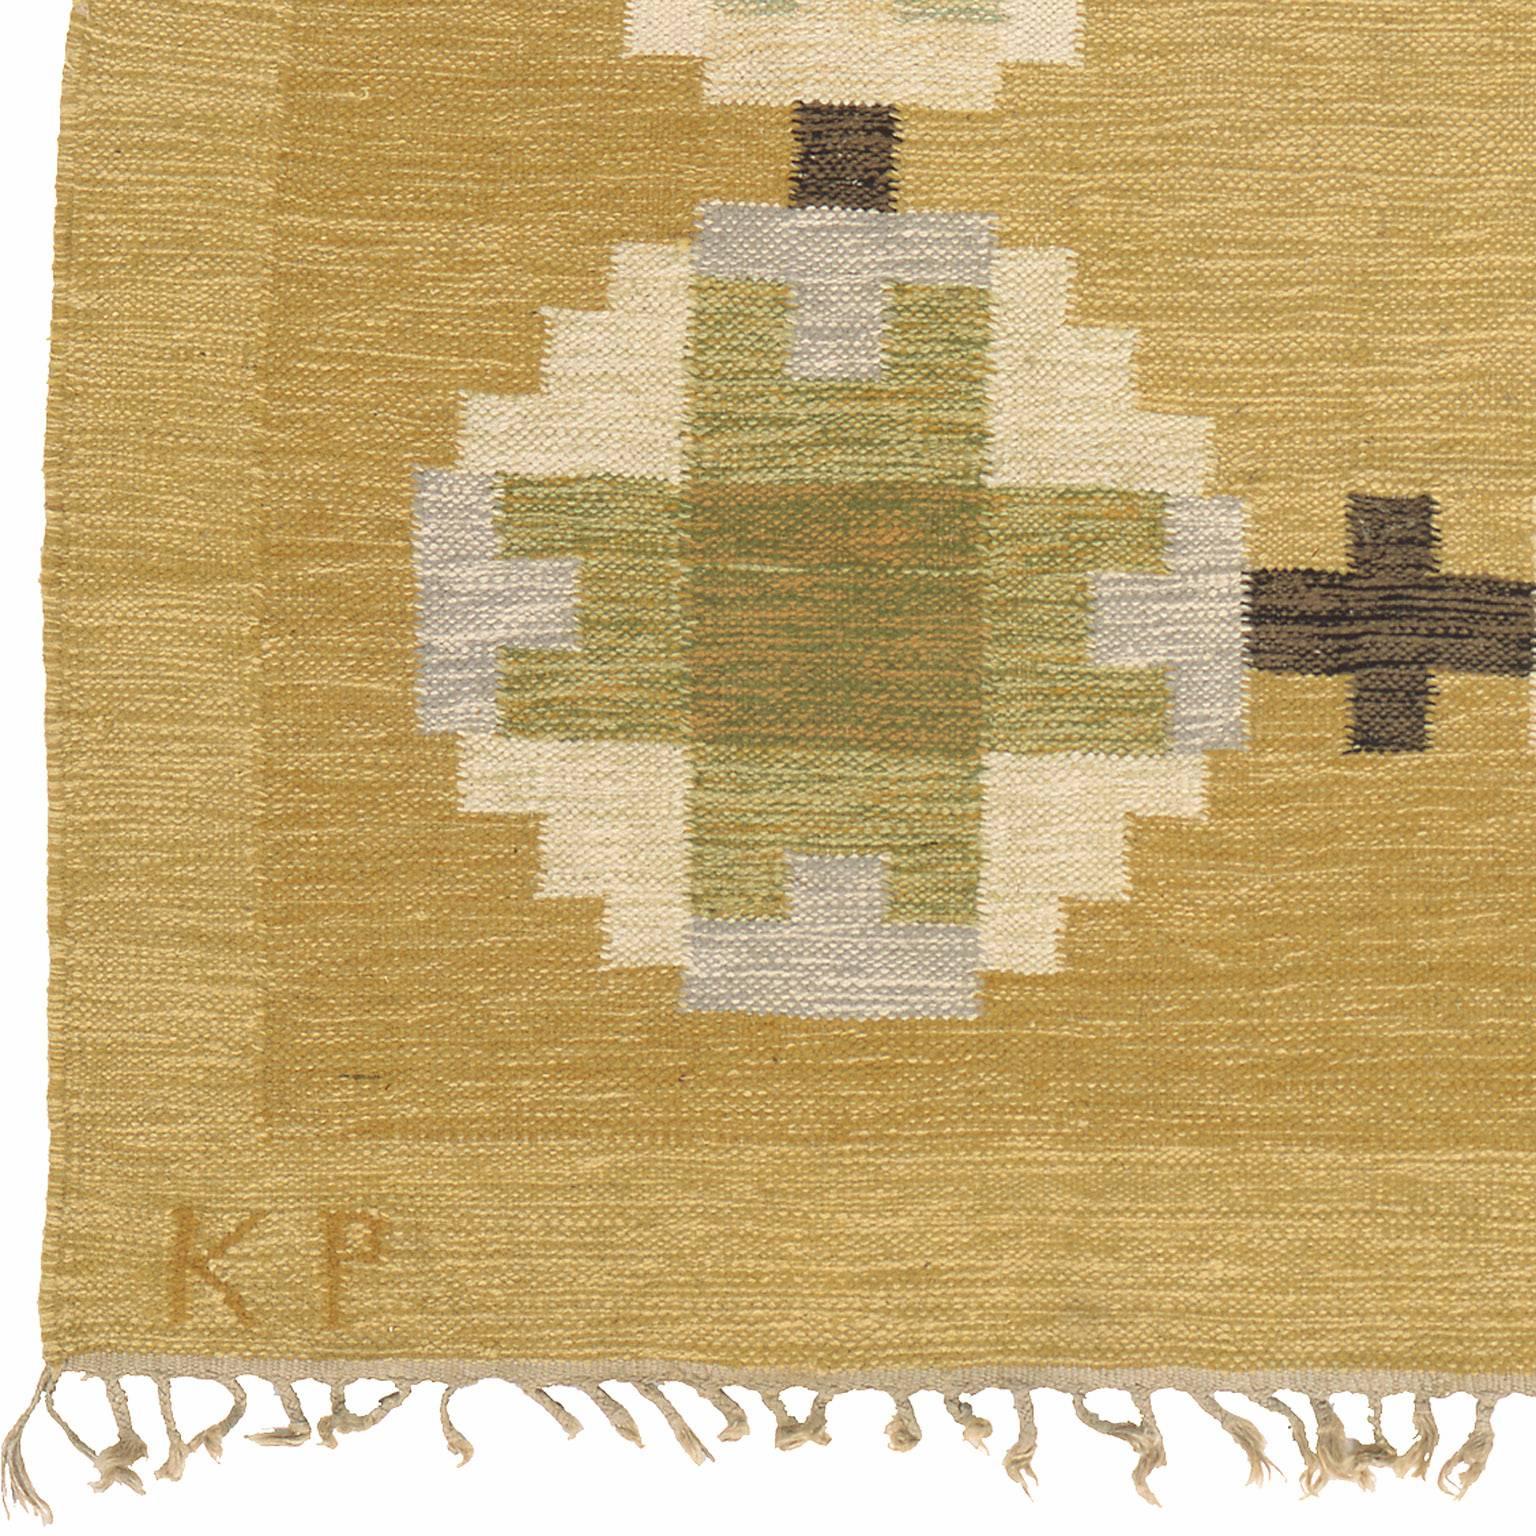 Mid 20th century Swedish flat-weave carpet. 
Initialed: KP